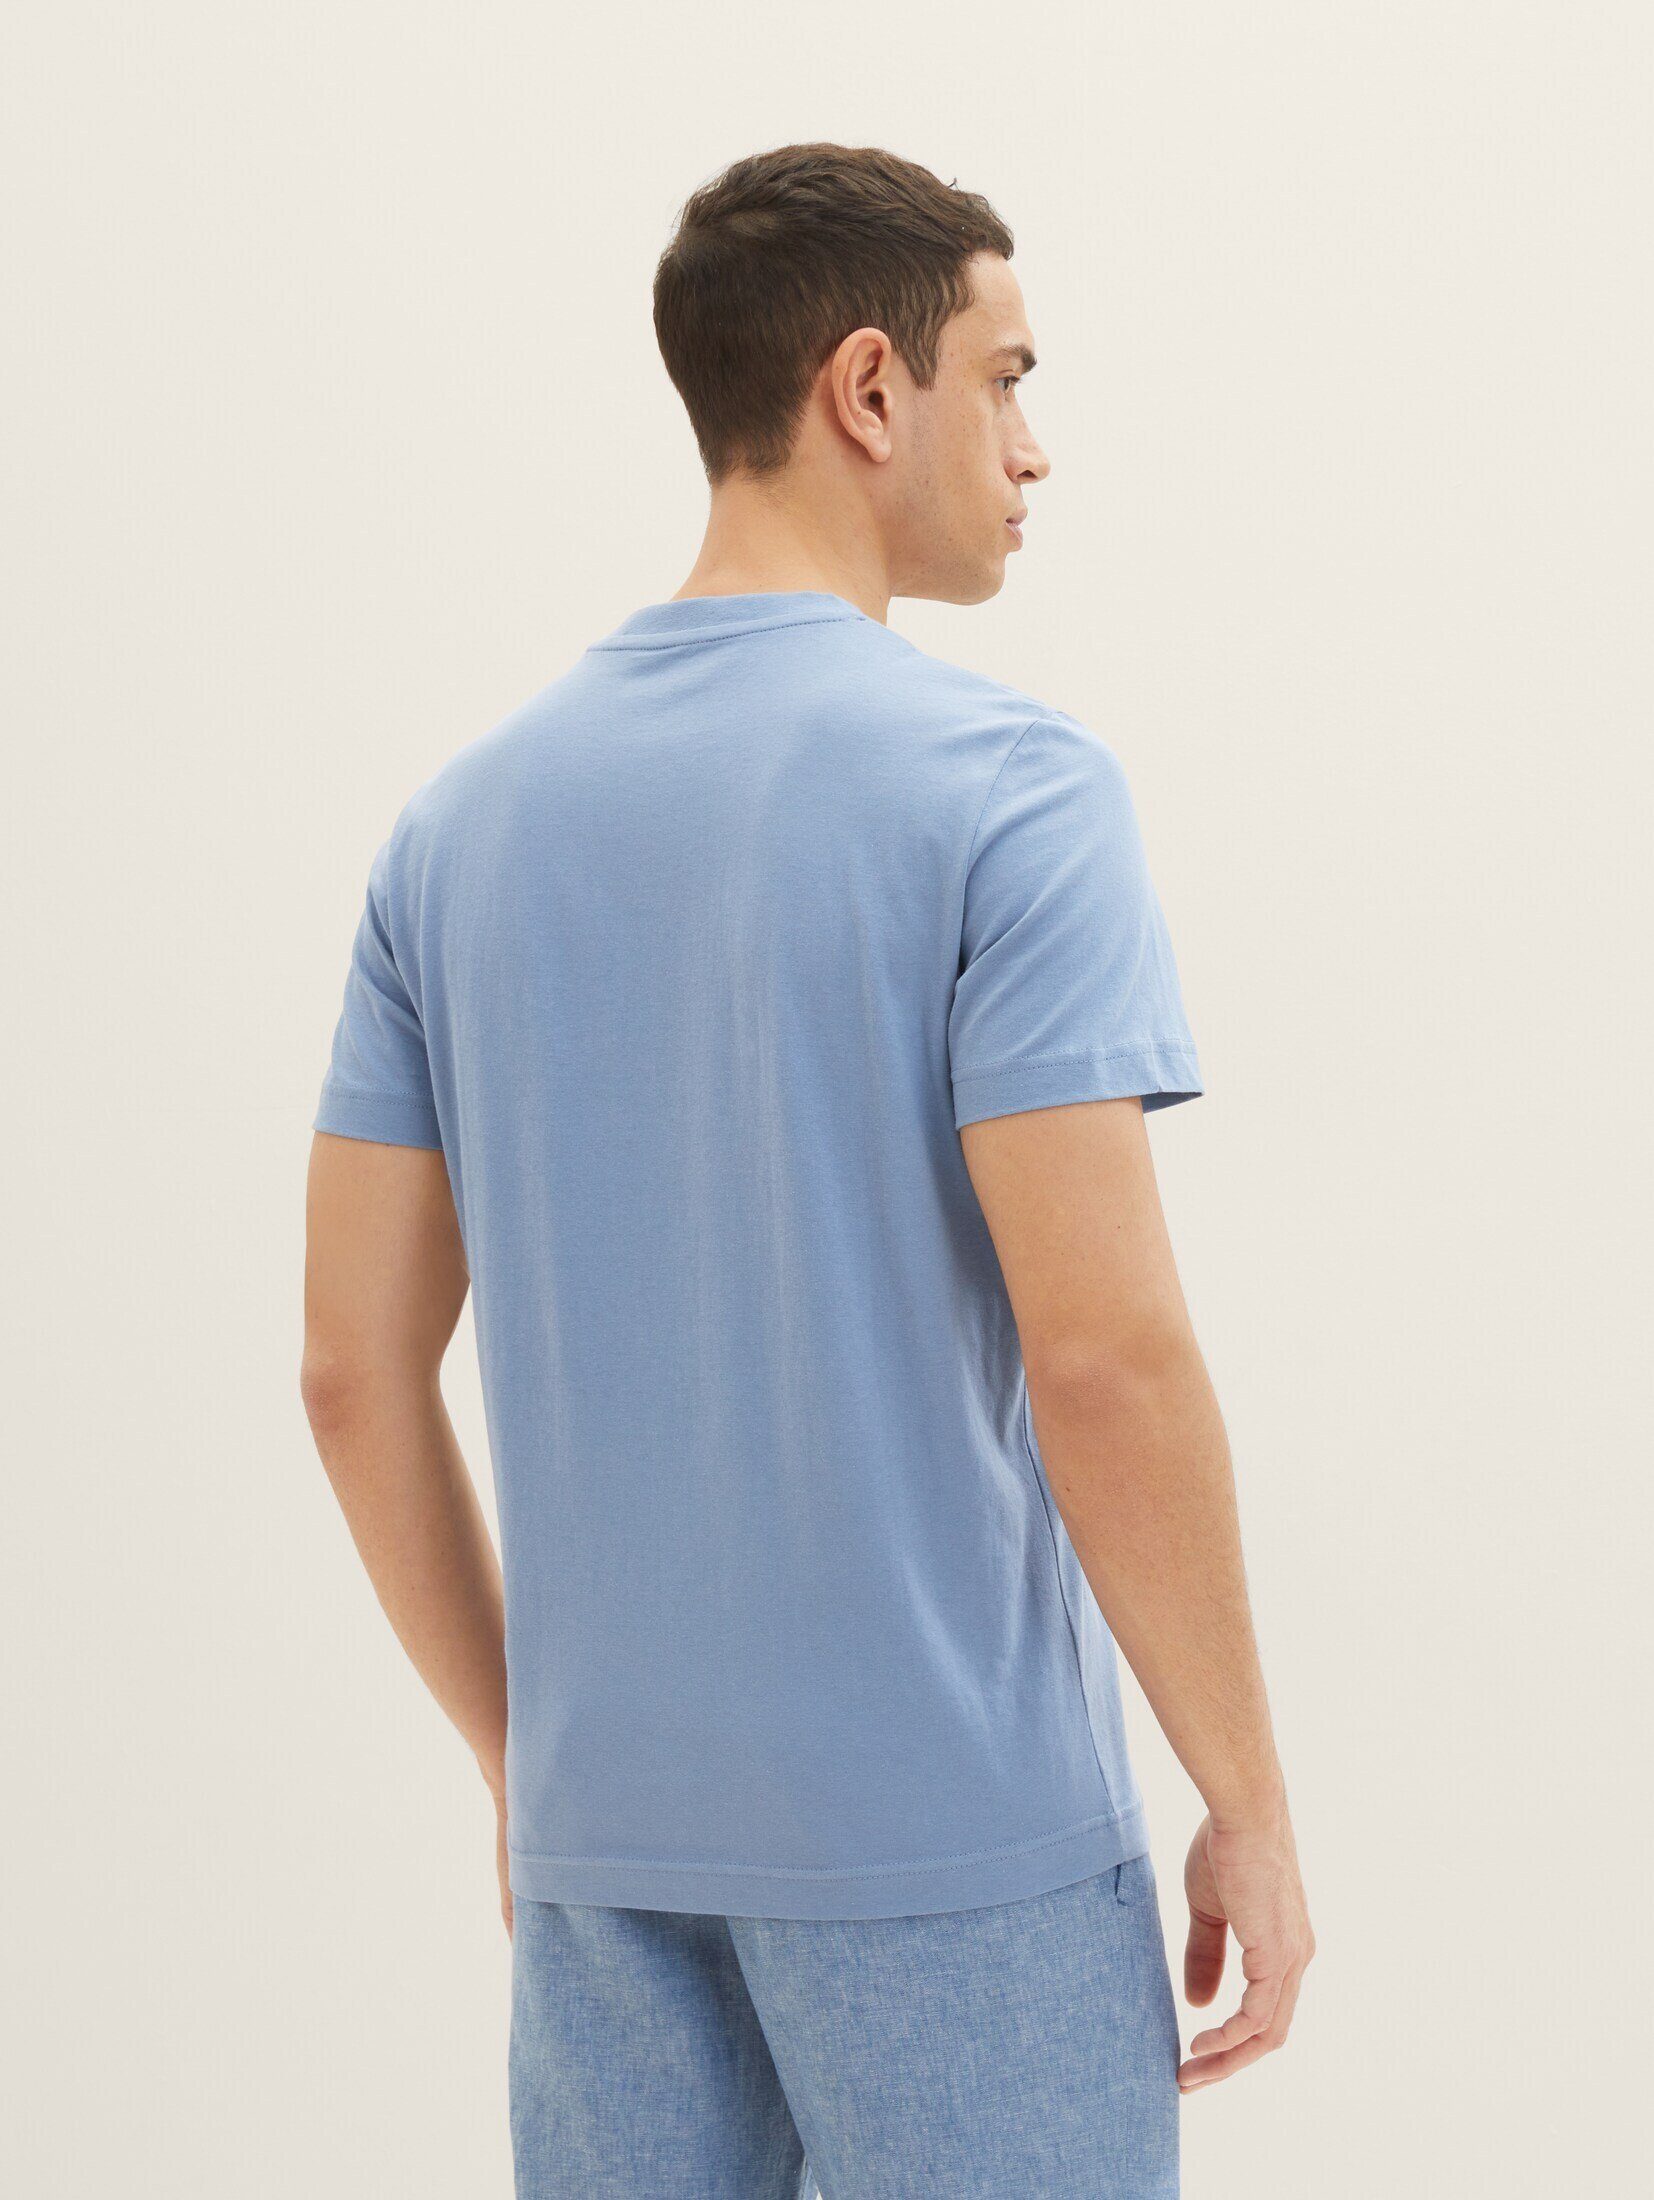 TOM TAILOR T-Shirt T-Shirt mit Mid Greyish Blue Fotoprint